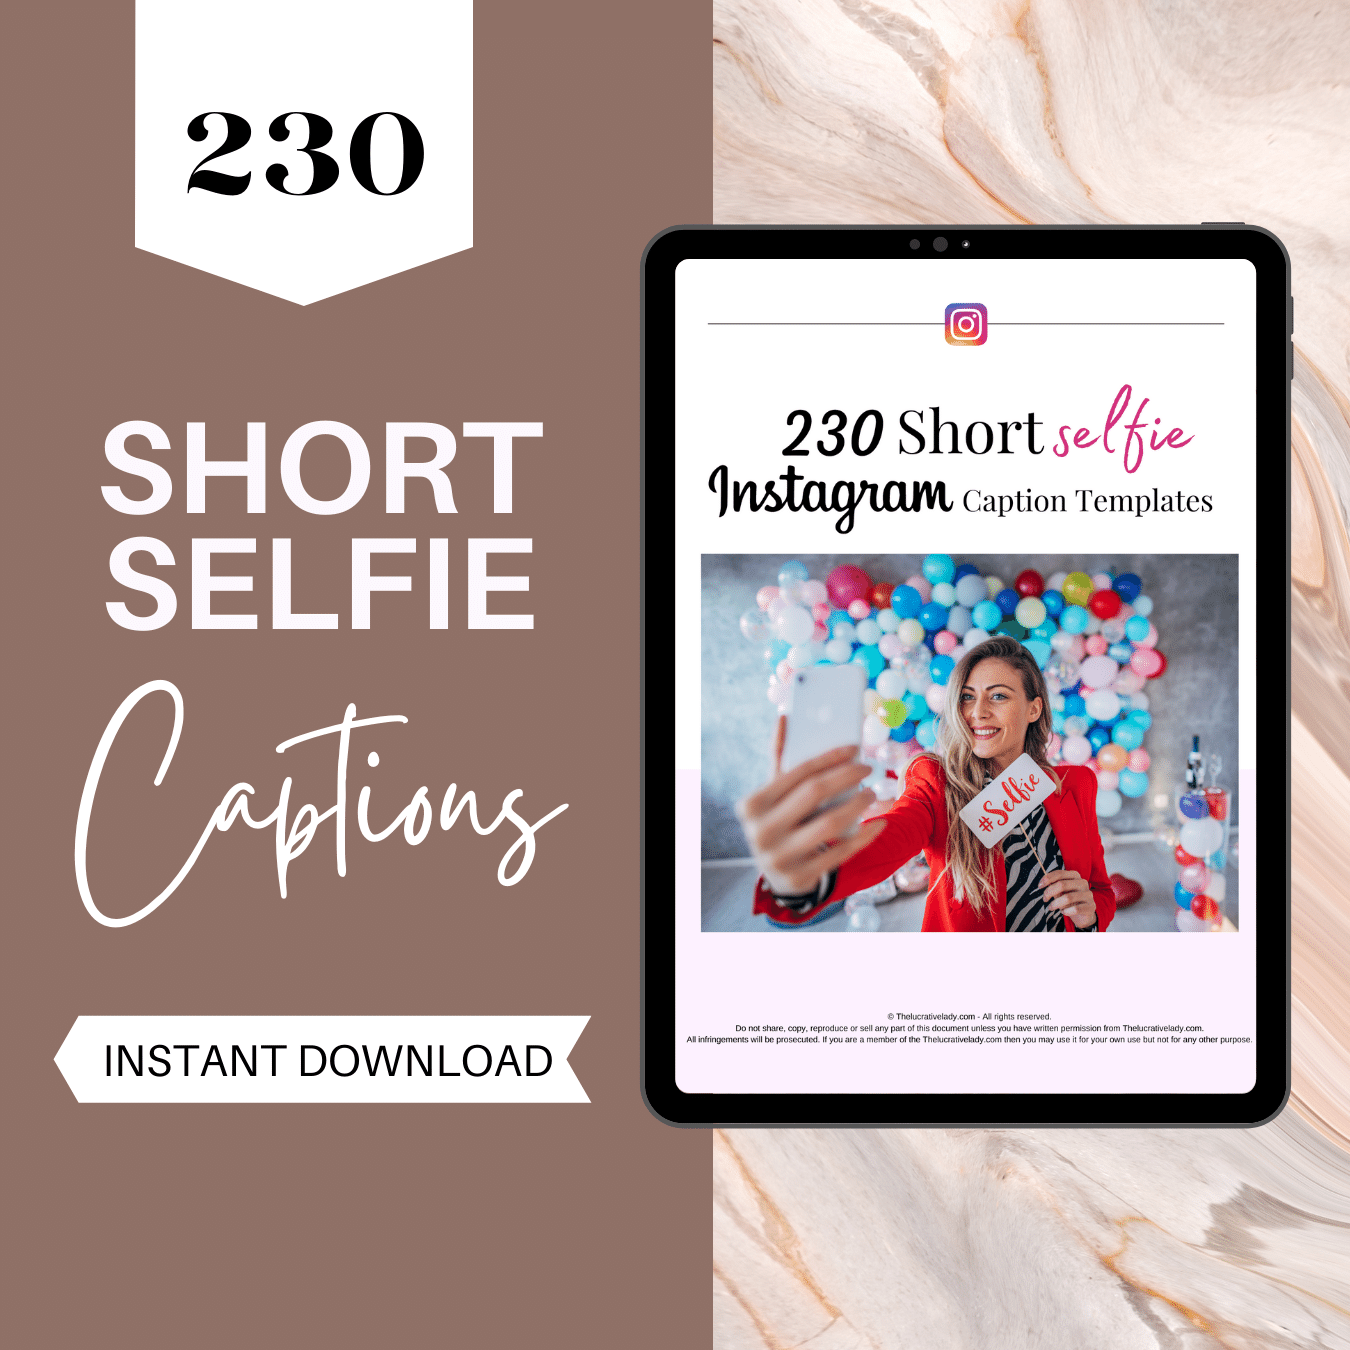 230 Short Selfie Captions